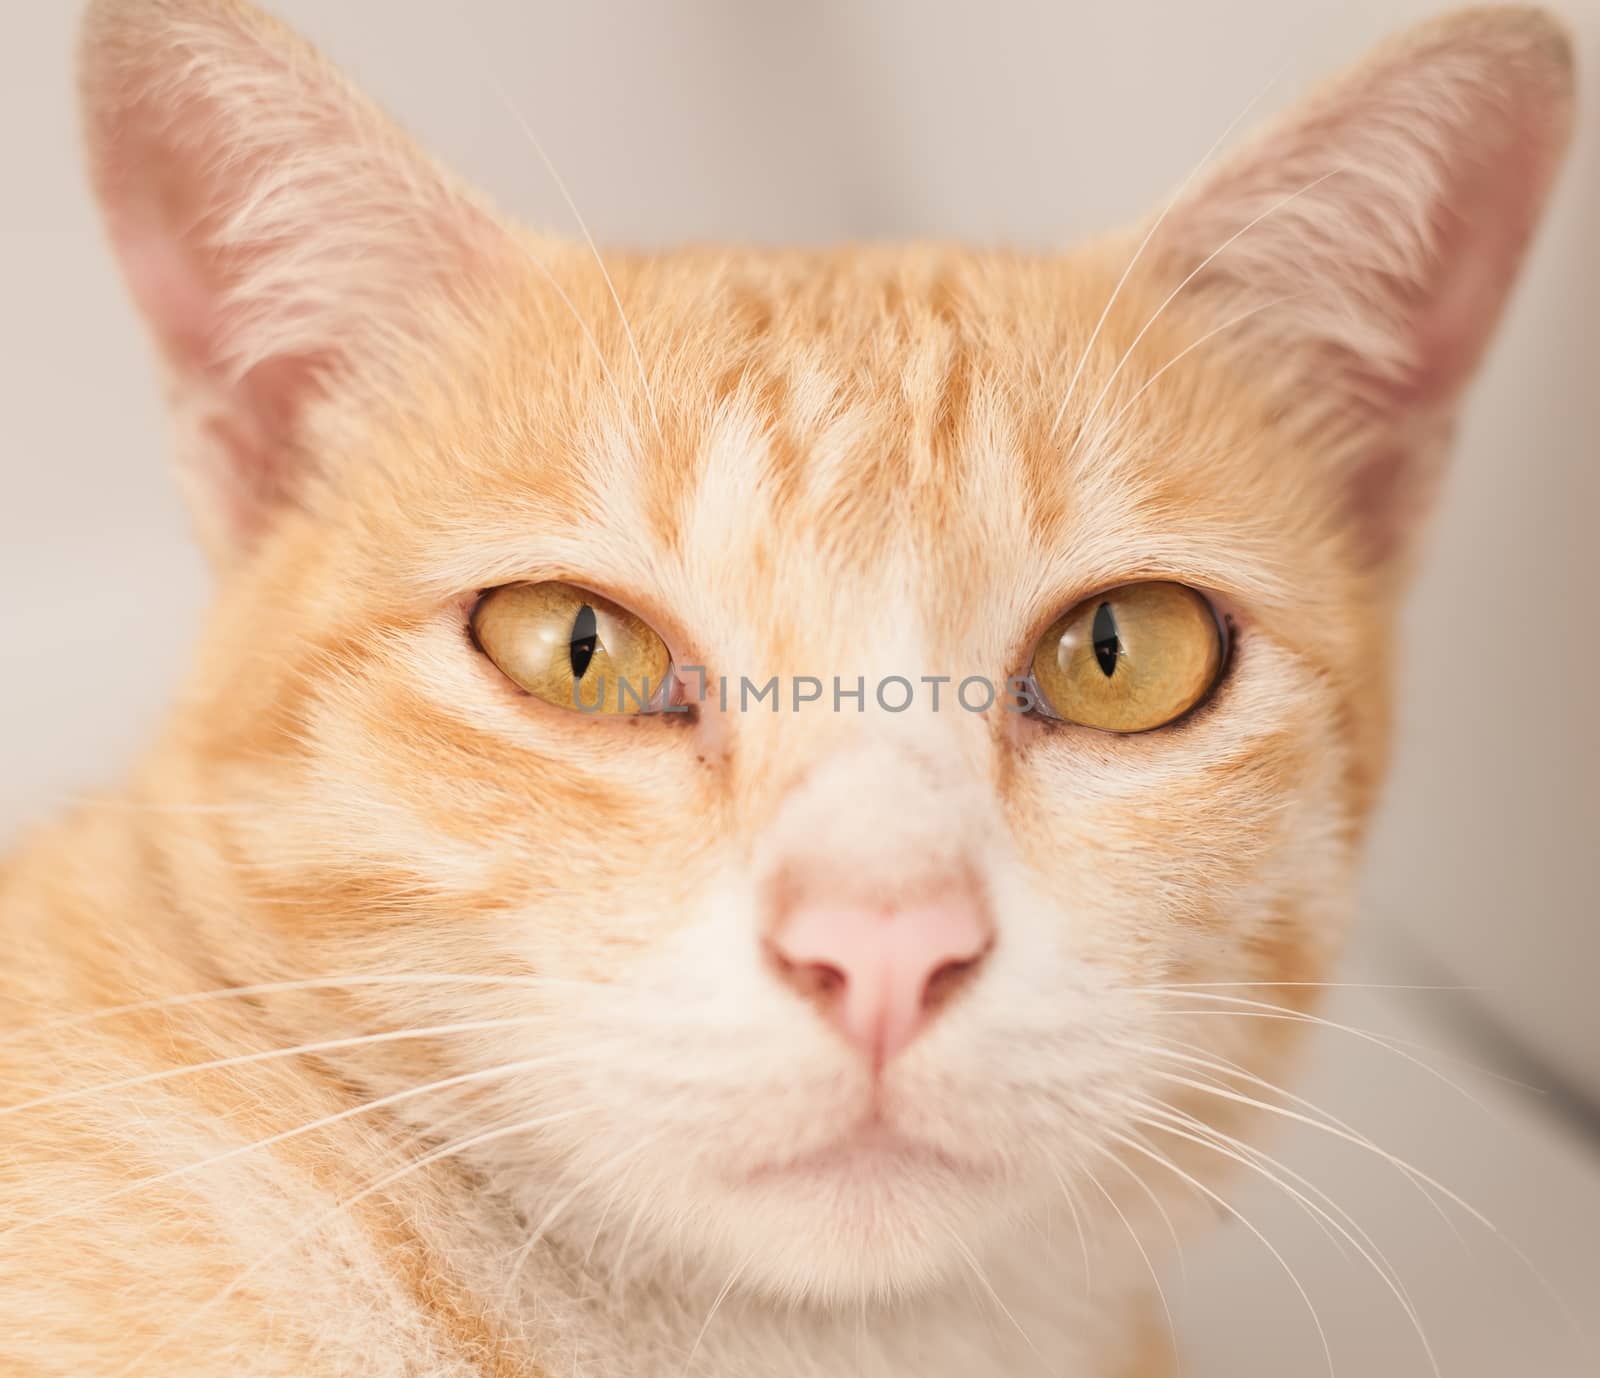 Cat face by Sorapop